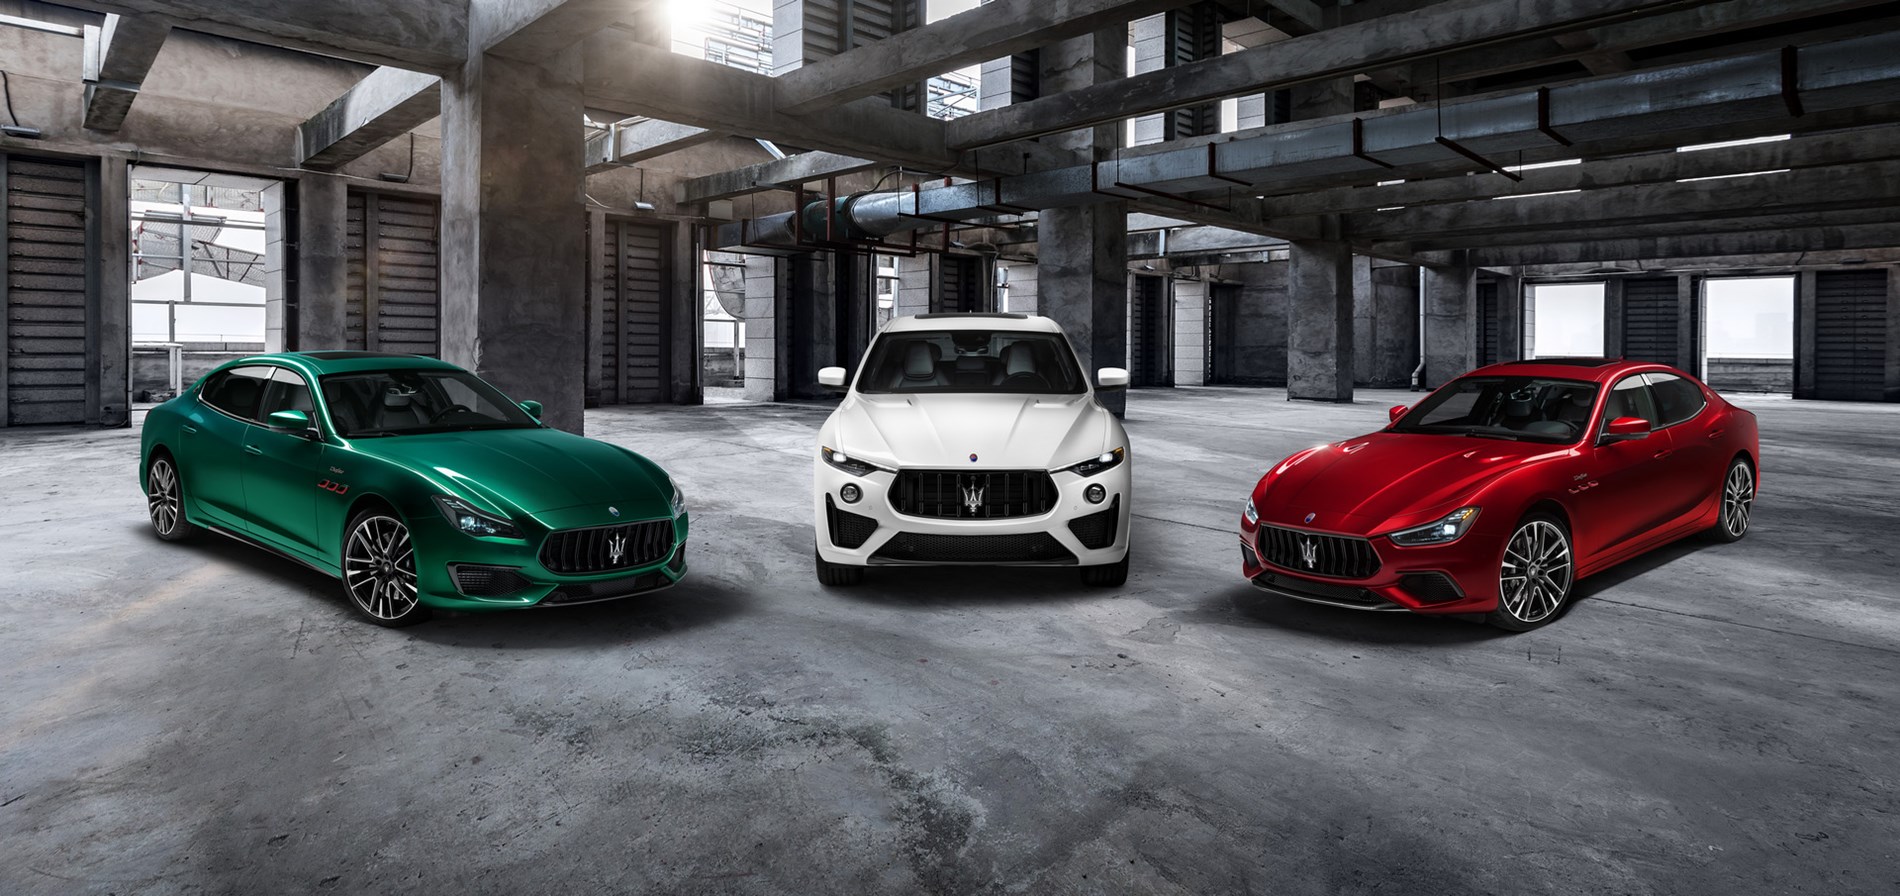 With the new Trofeo collection, Ghibli and Quattroporte are transformed into Maserati super-sedans